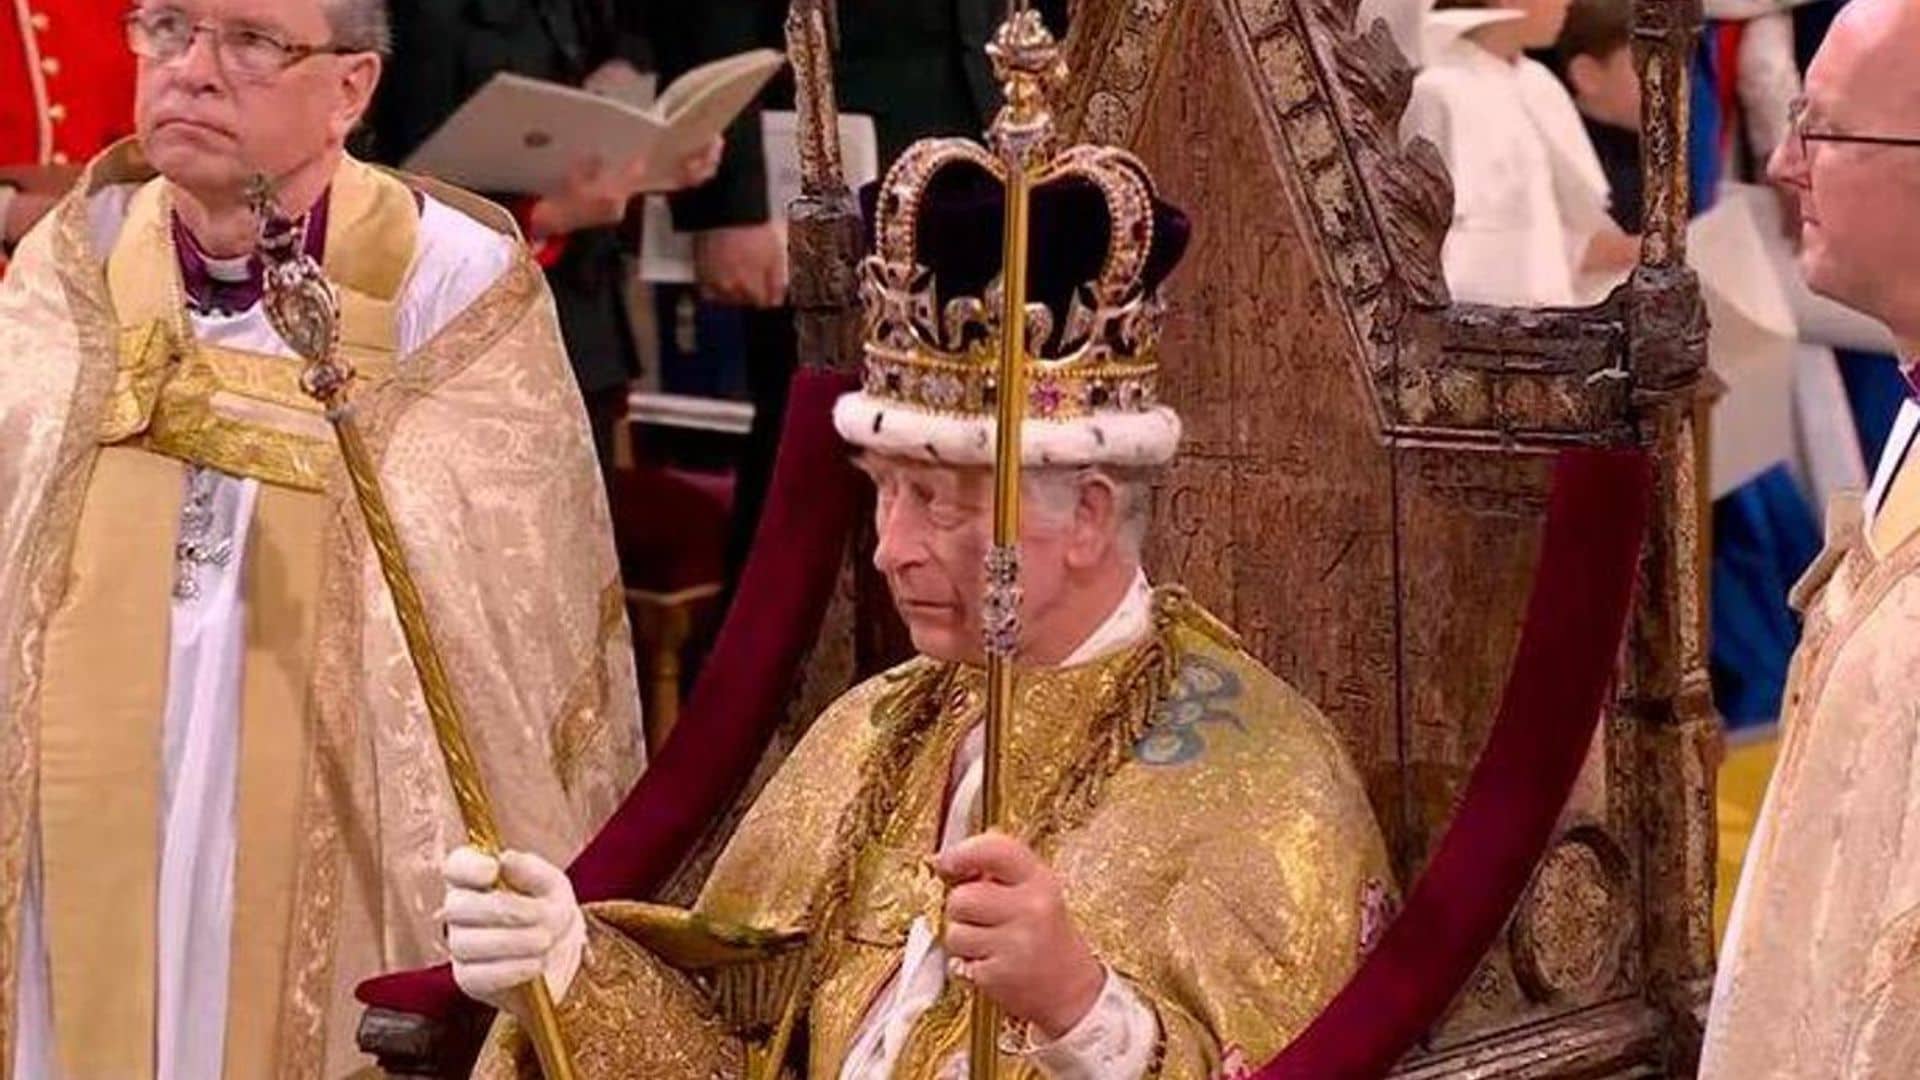 King Charles III crowned as King of England